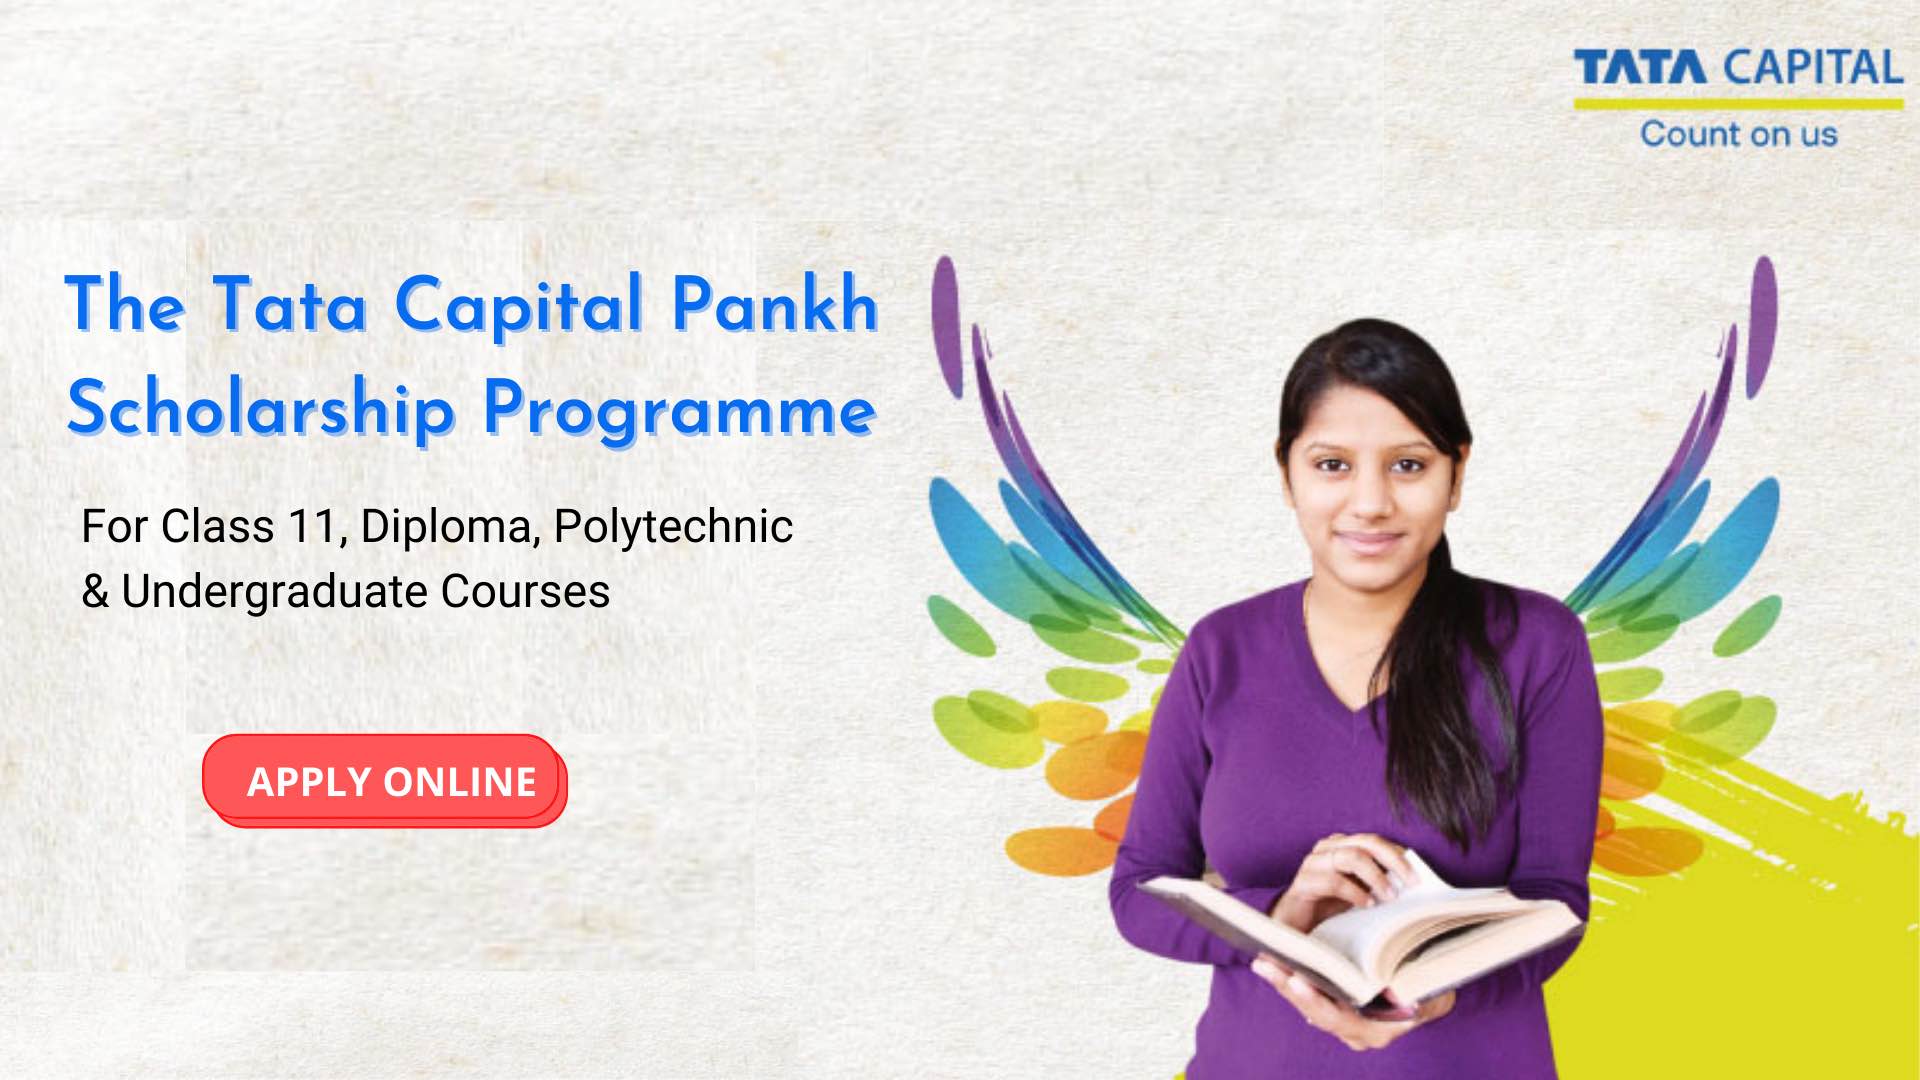 Tata Capital Pankh Scholarship Programme